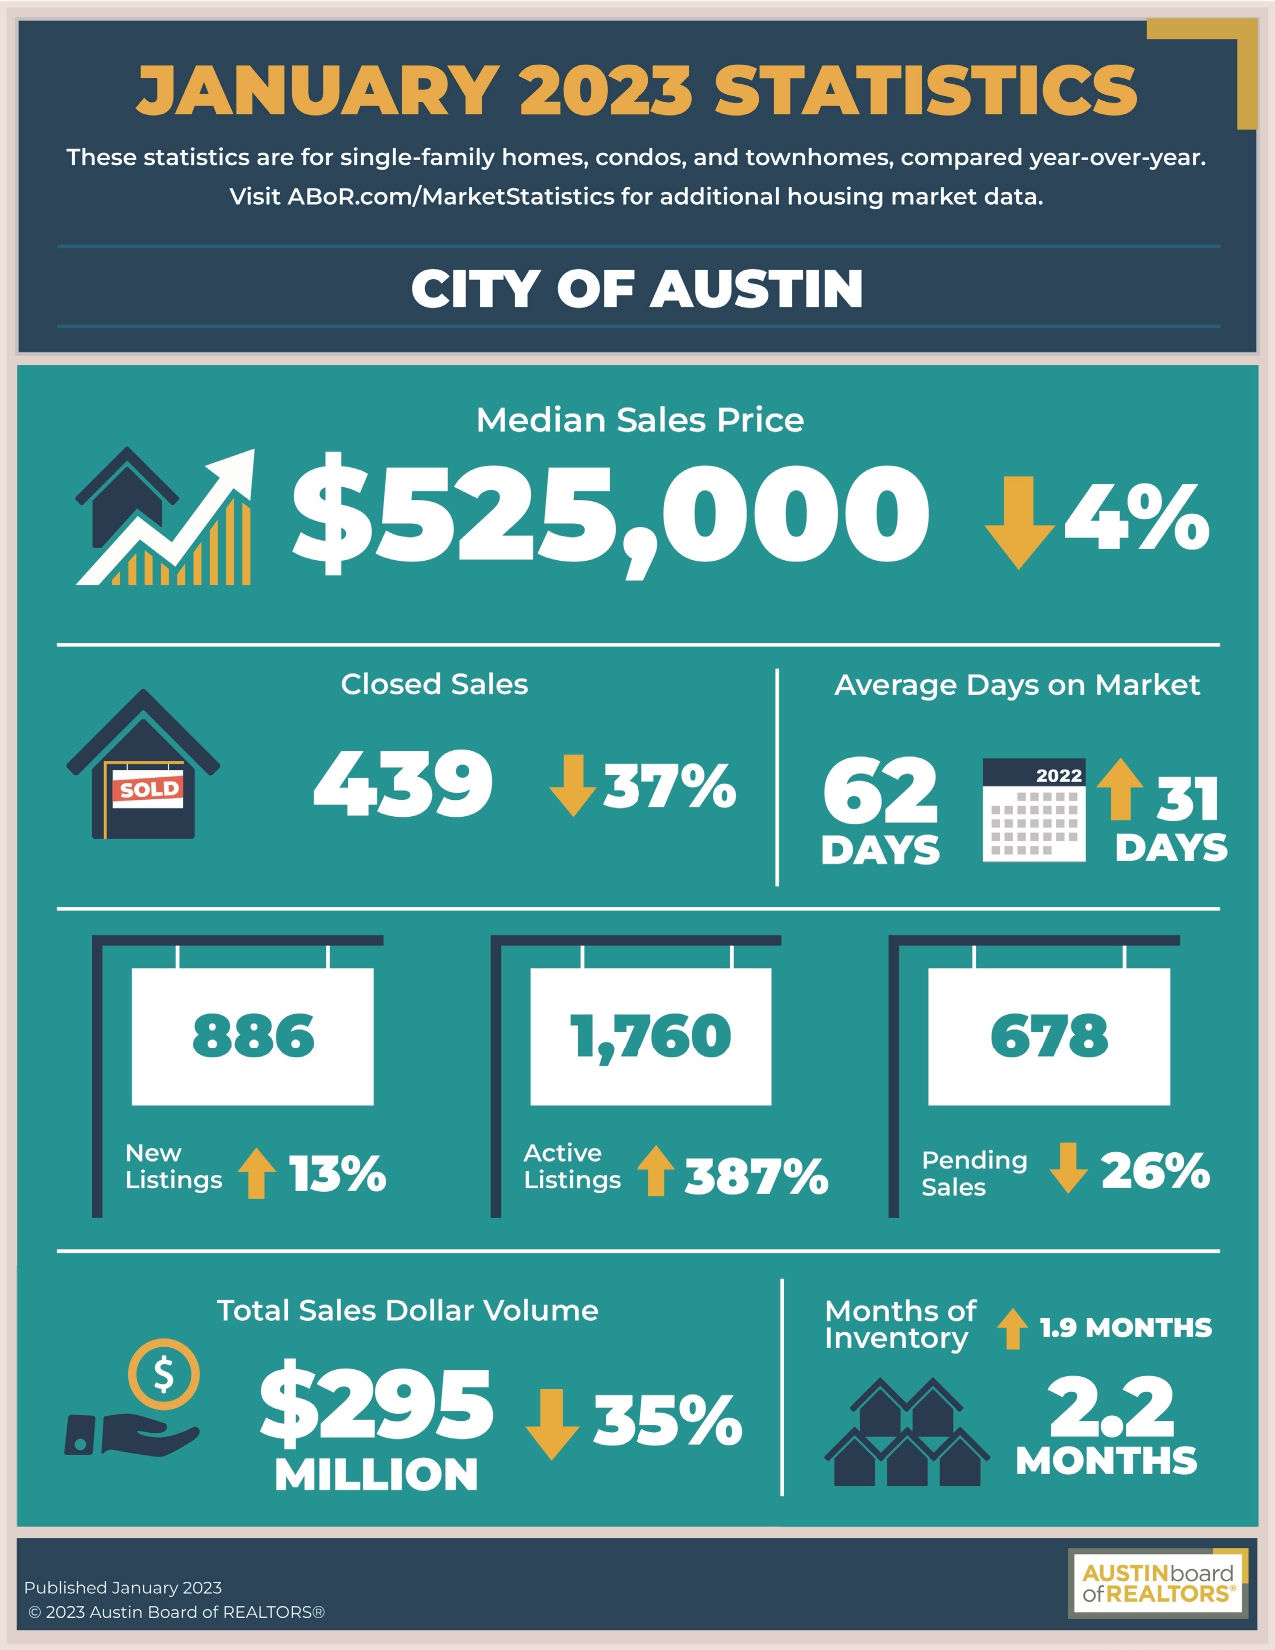 Image of city of Austin real estate market stats Jan 2023